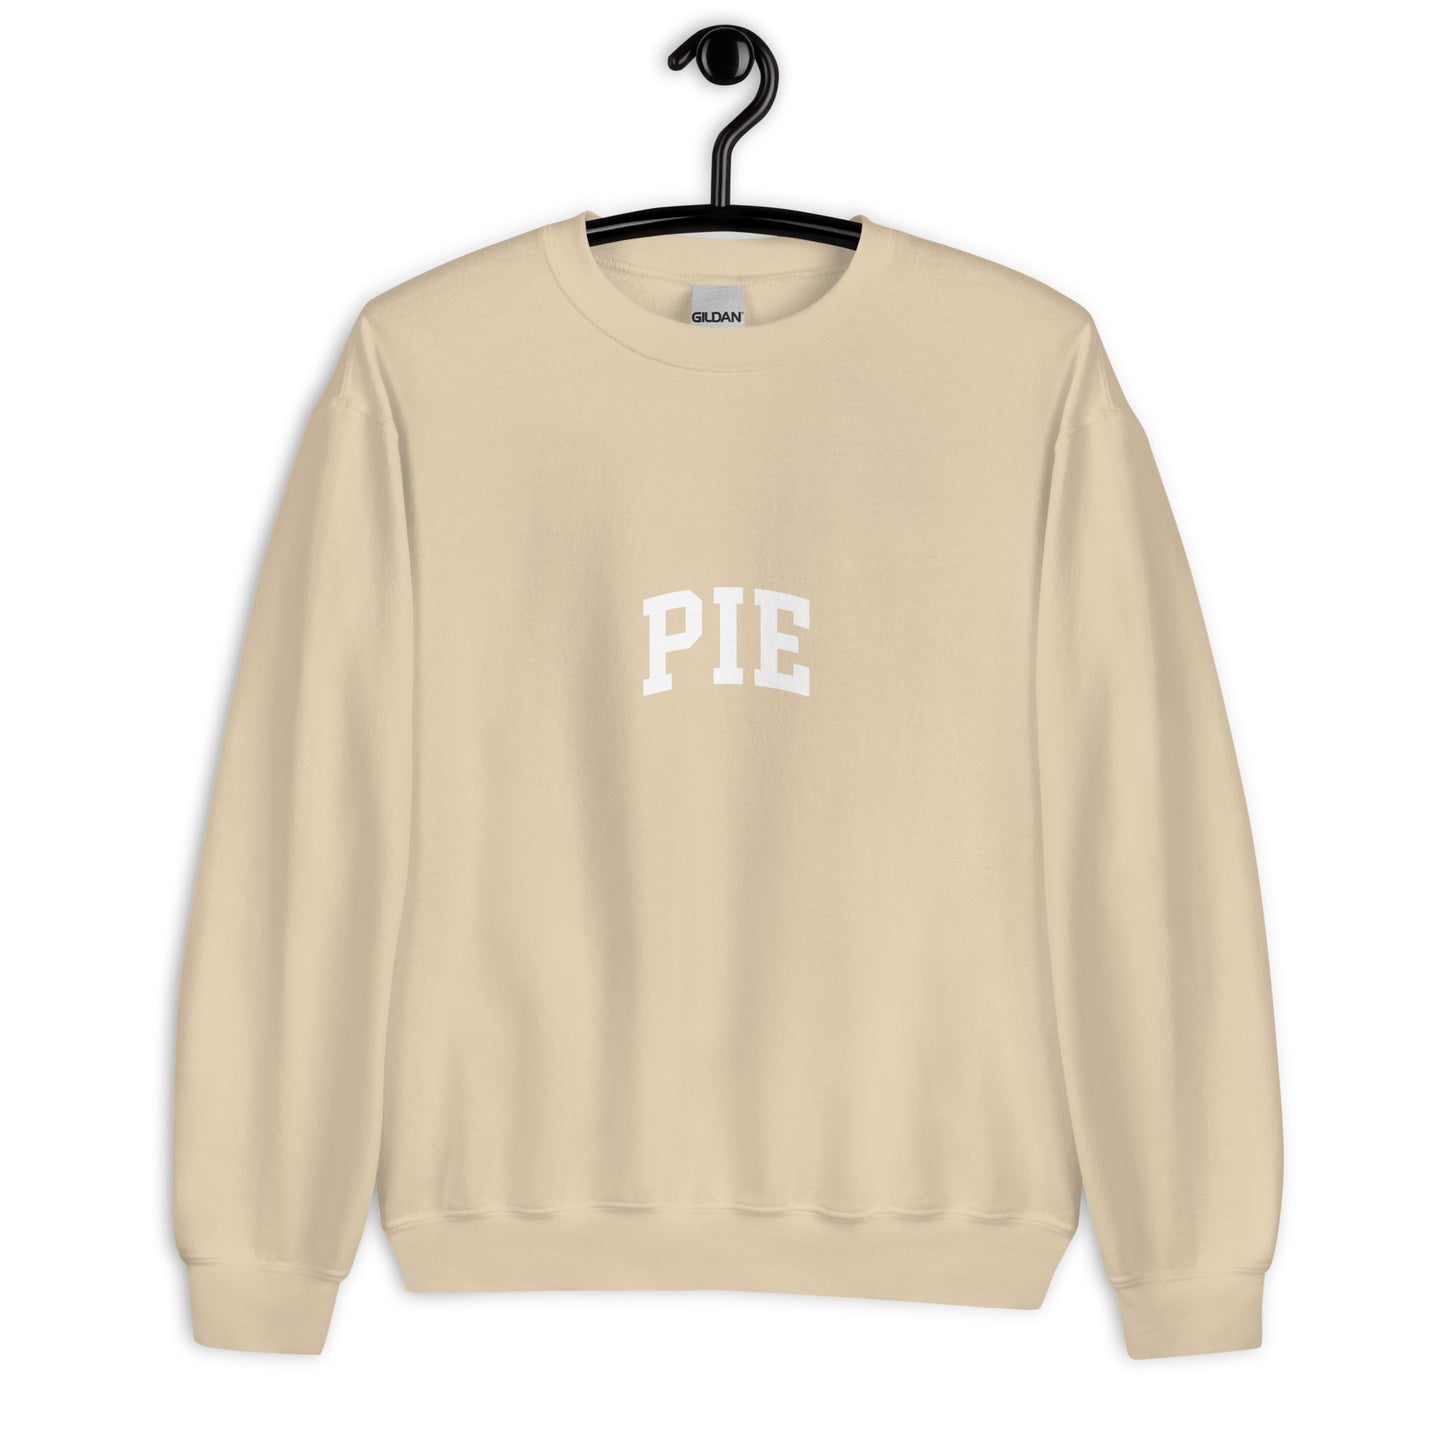 Pie Sweatshirt - Arched Font